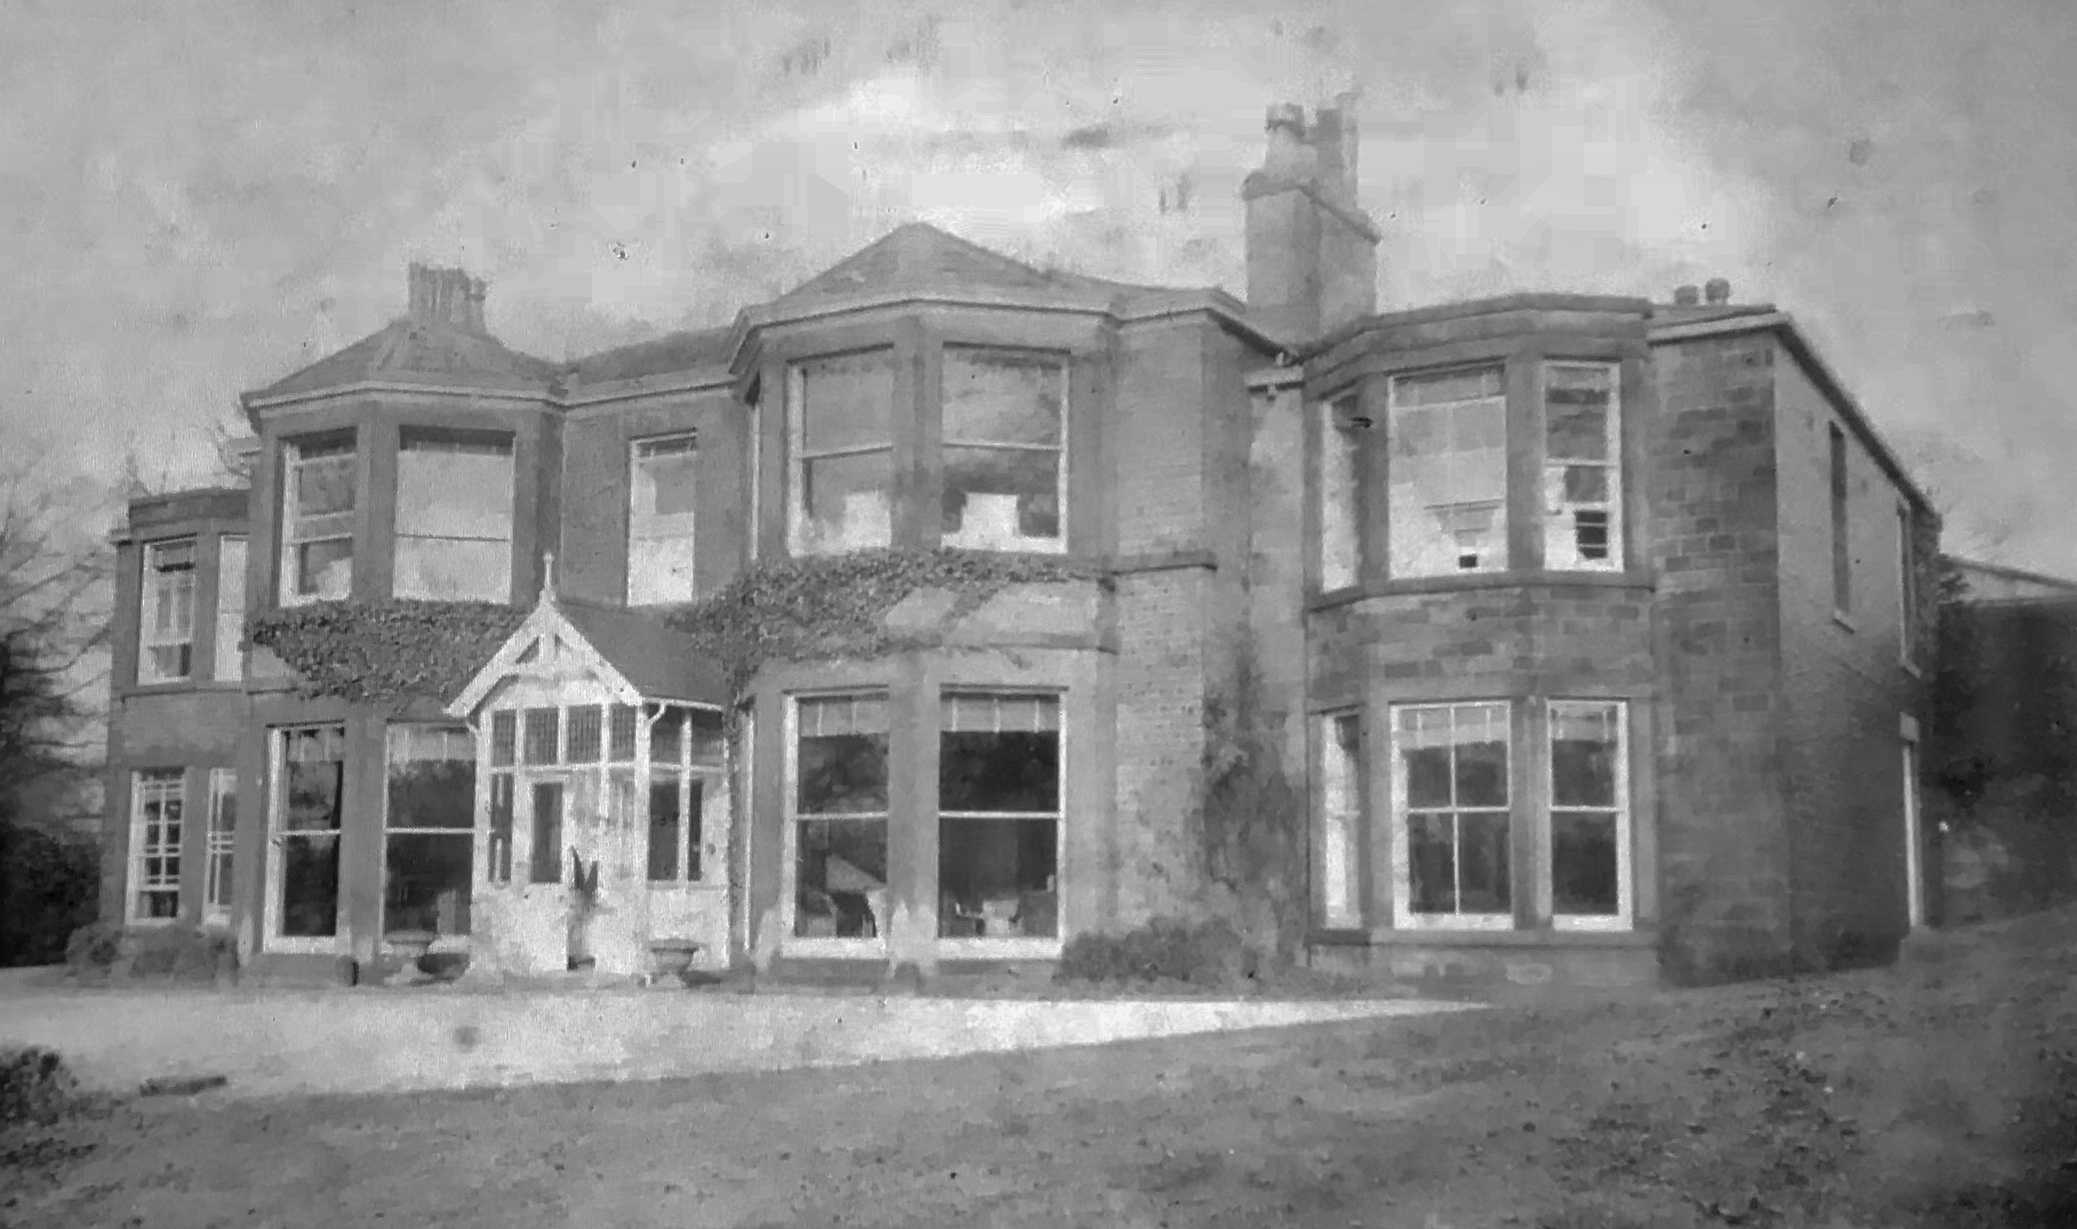 Leeds Teacher Training Hostel, St Ann’s Lane, circa 1917 